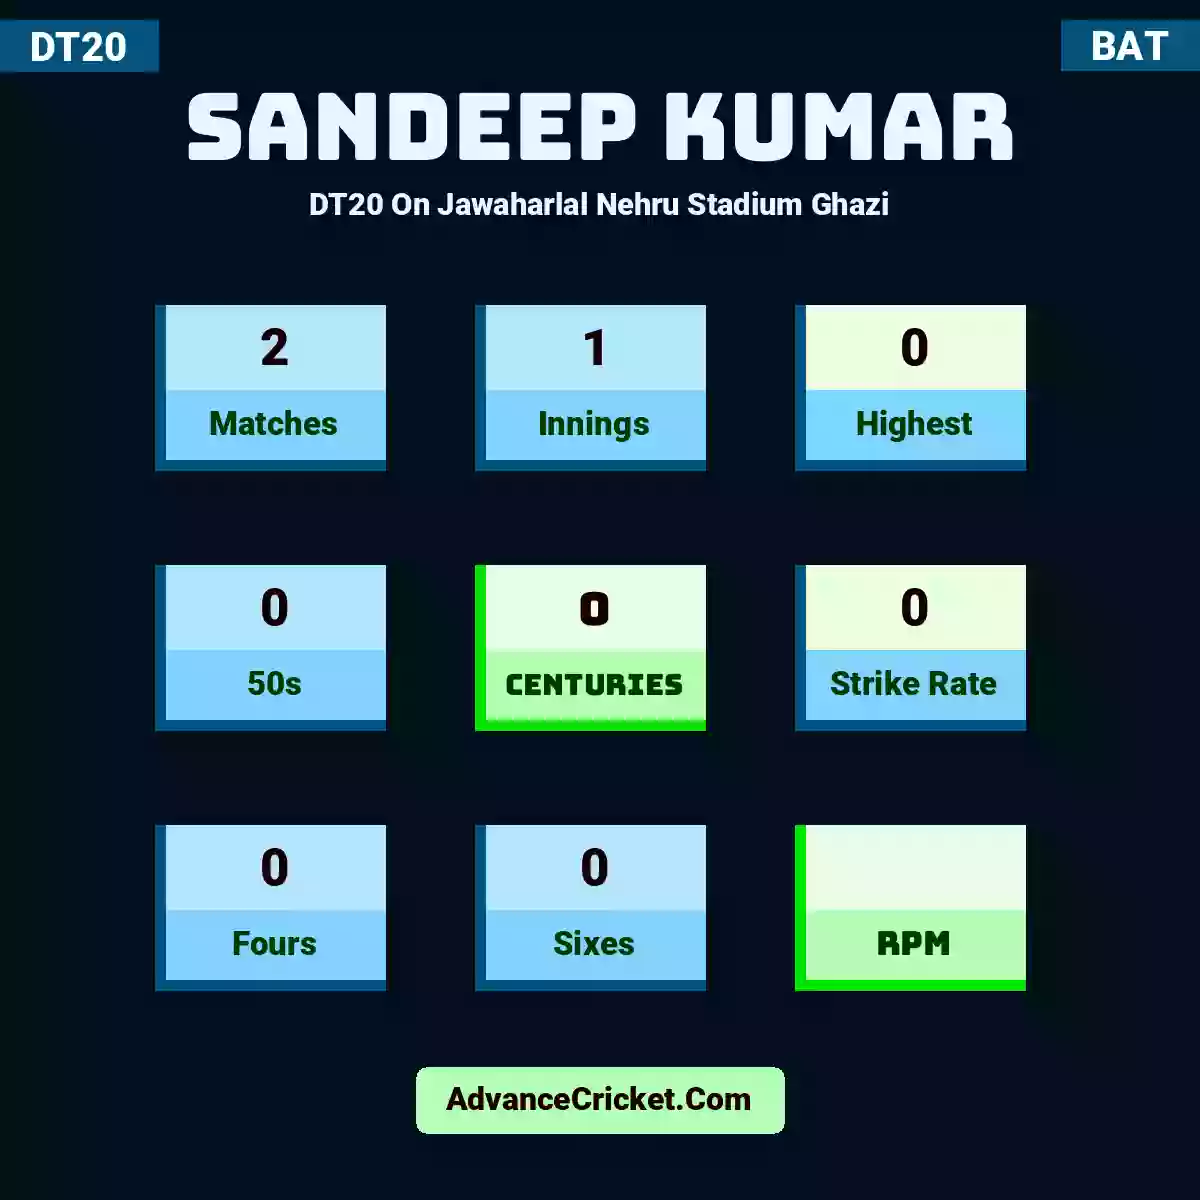 Sandeep Kumar DT20  On Jawaharlal Nehru Stadium Ghazi, Sandeep Kumar played 2 matches, scored 0 runs as highest, 0 half-centuries, and 0 centuries, with a strike rate of 0. S.Kumar hit 0 fours and 0 sixes.